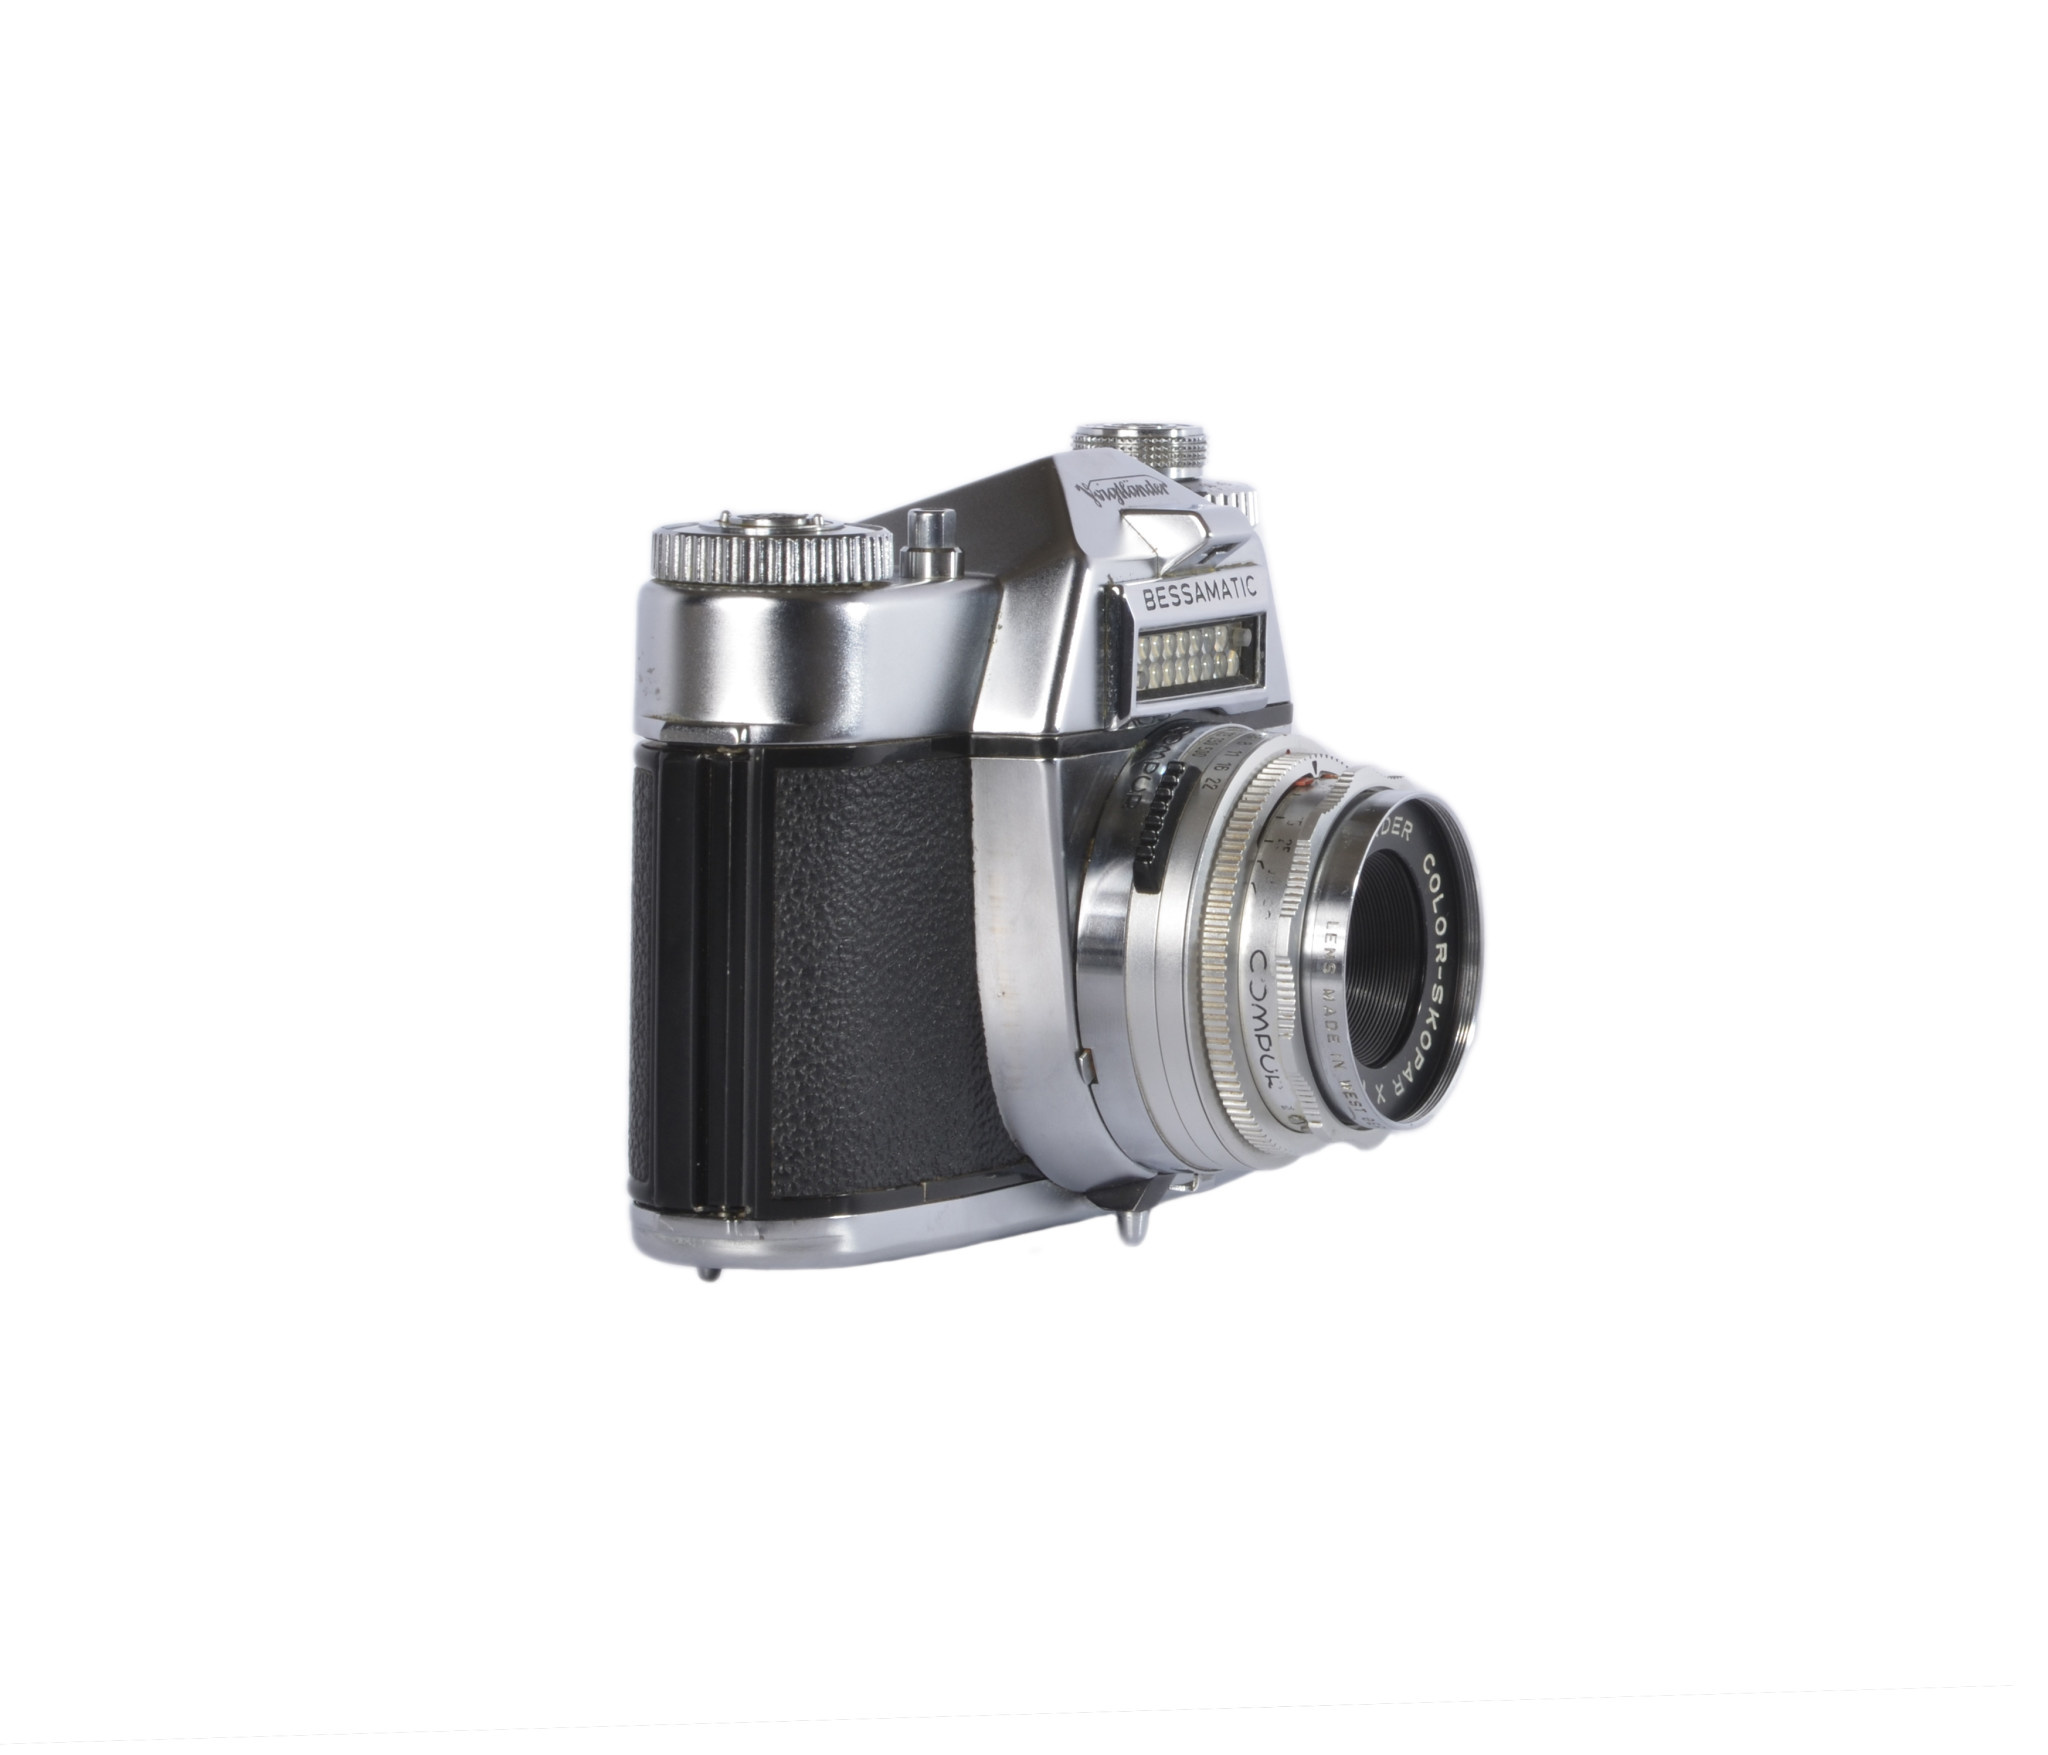 Voigtlander Bessamatic Deluxe with Color-Skopar-X 50mm f/2.8 LeZot Camera  Sales and Camera Repair Camera Buyers Digital Printing